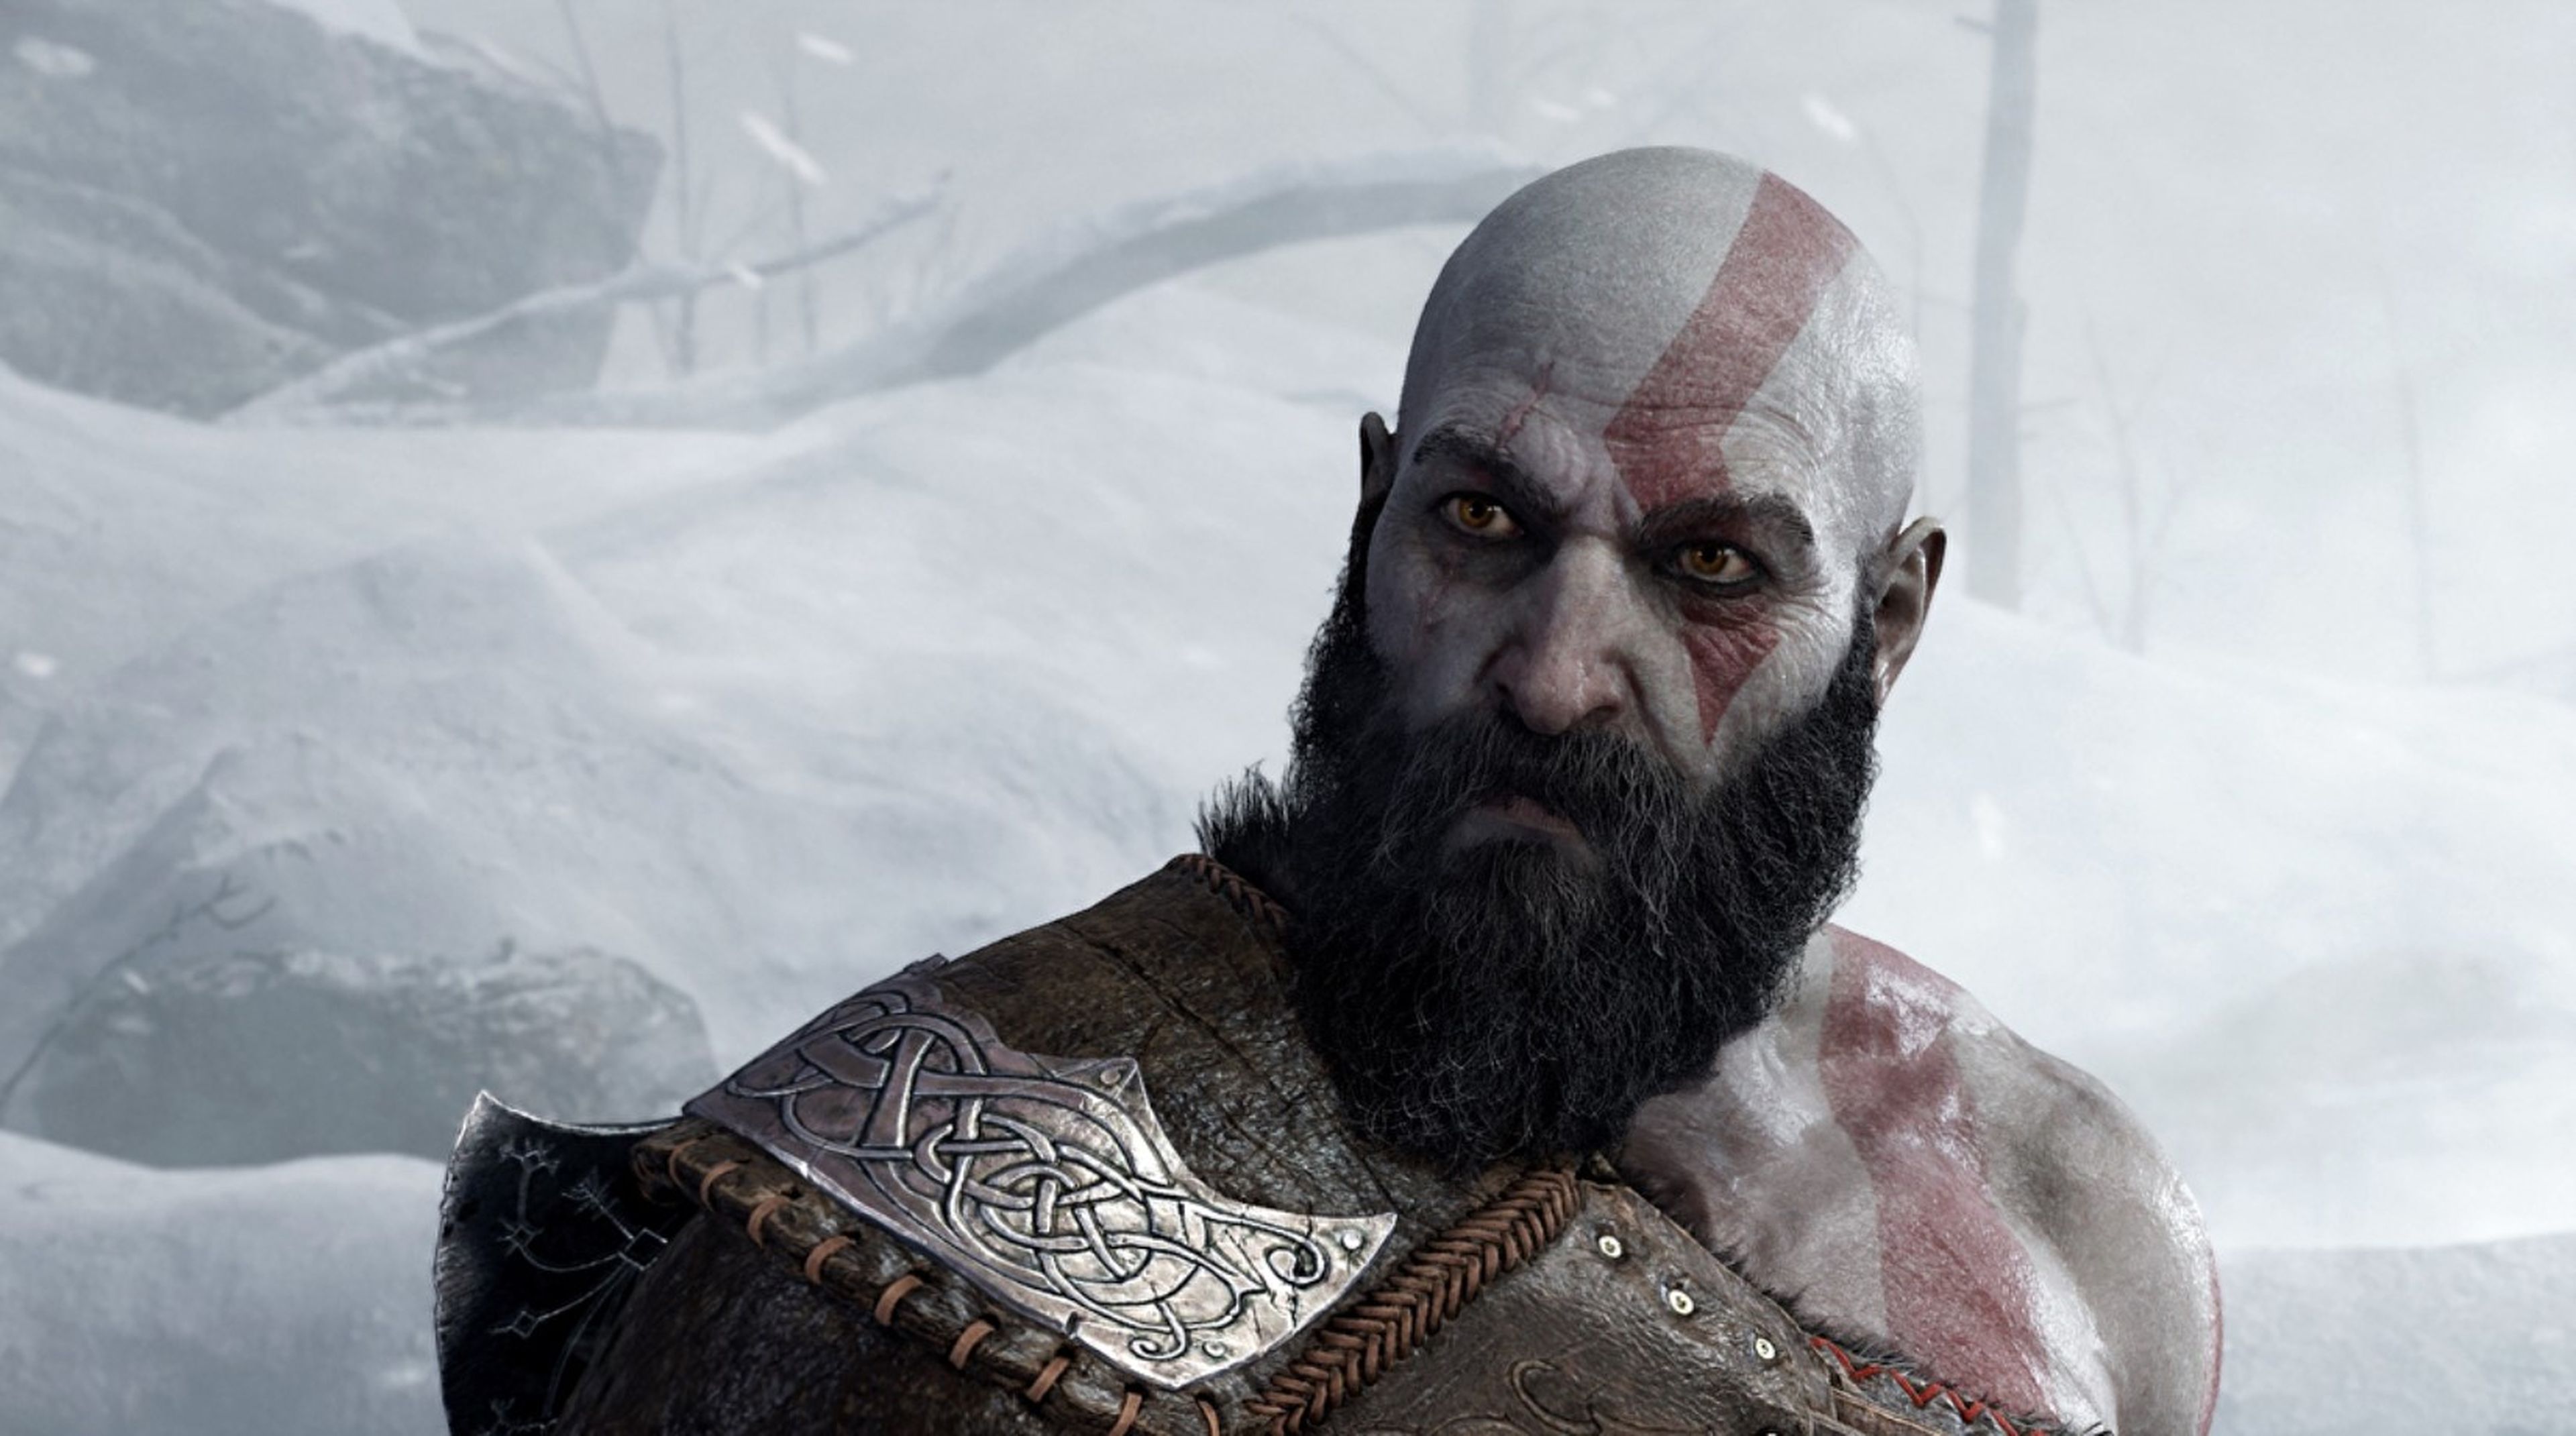 God of War Ragnarok - Kratos